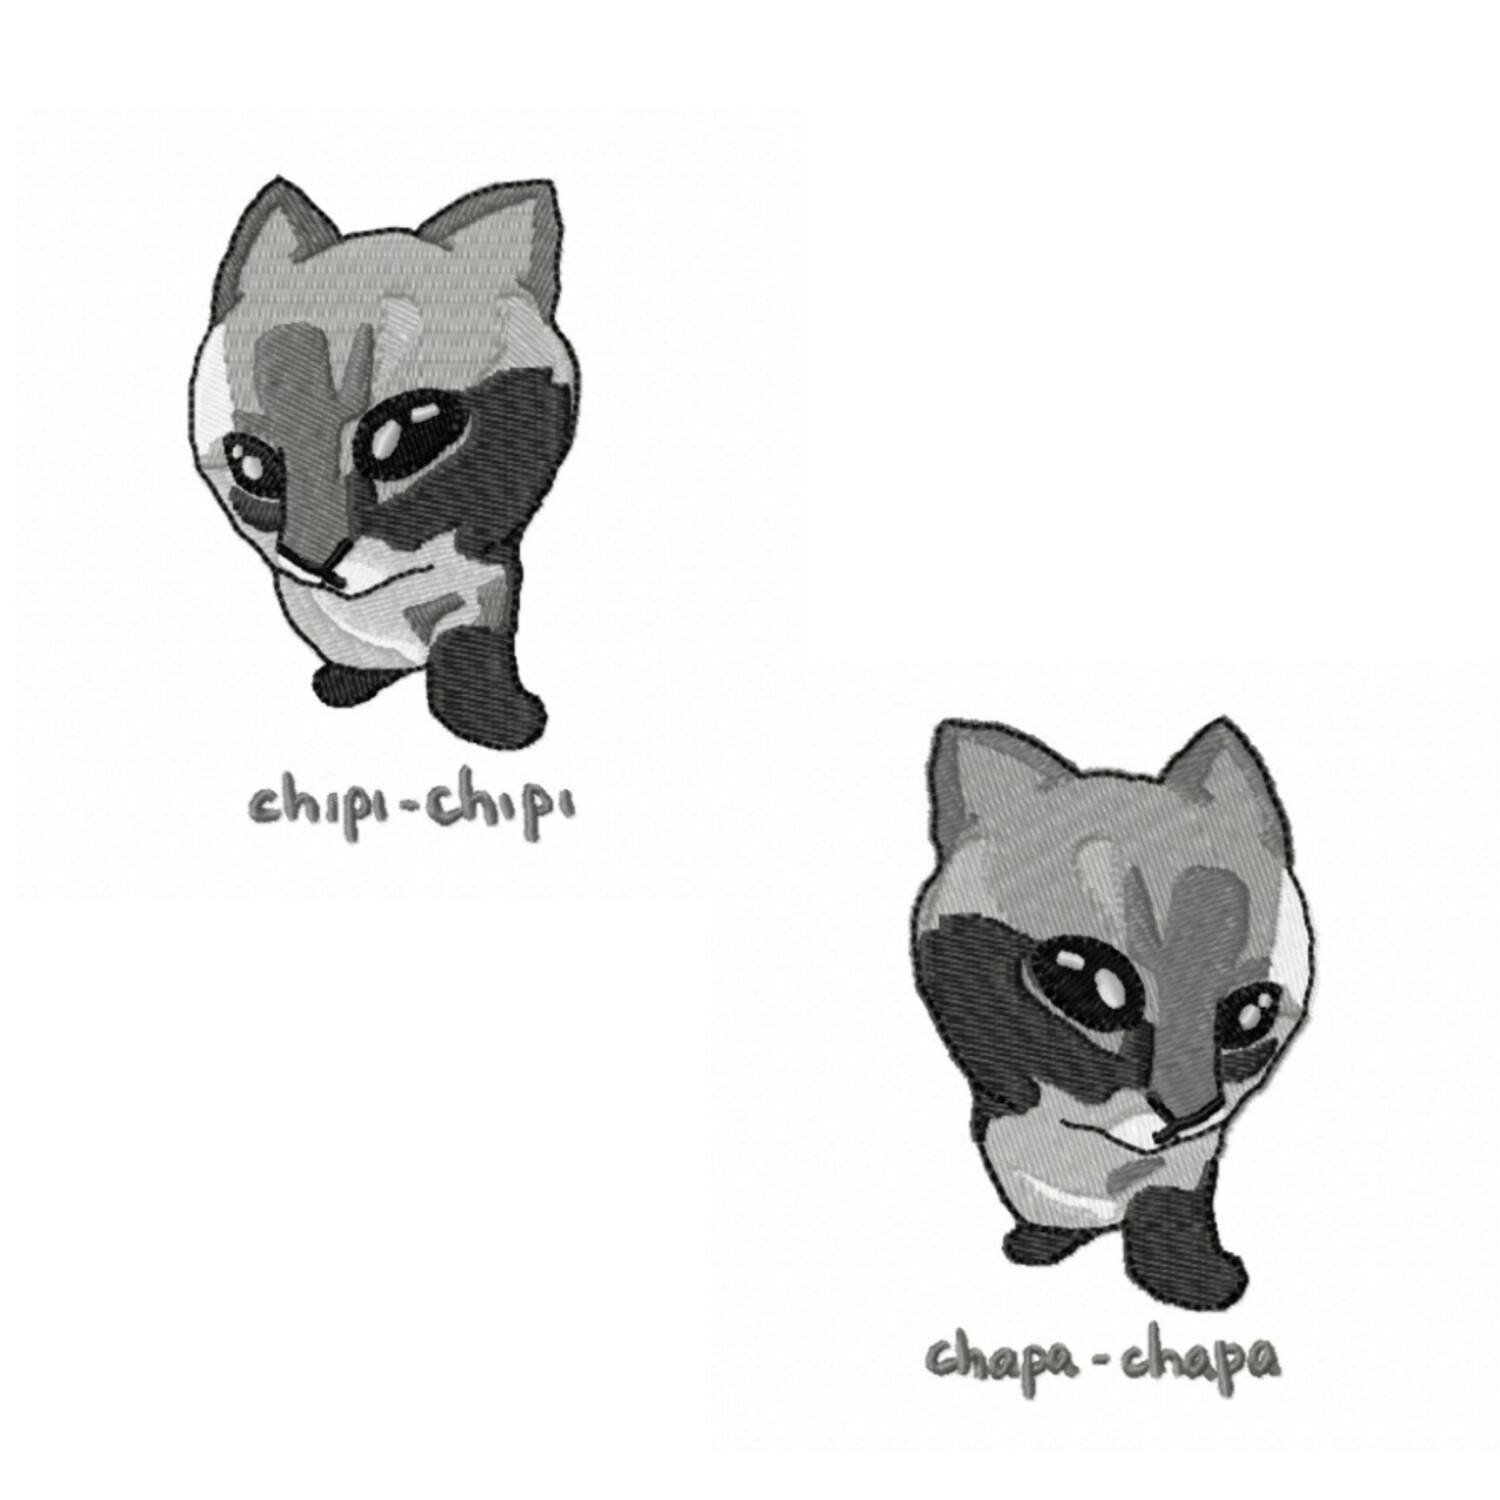 Chipi-chipi + Chapa-chapa